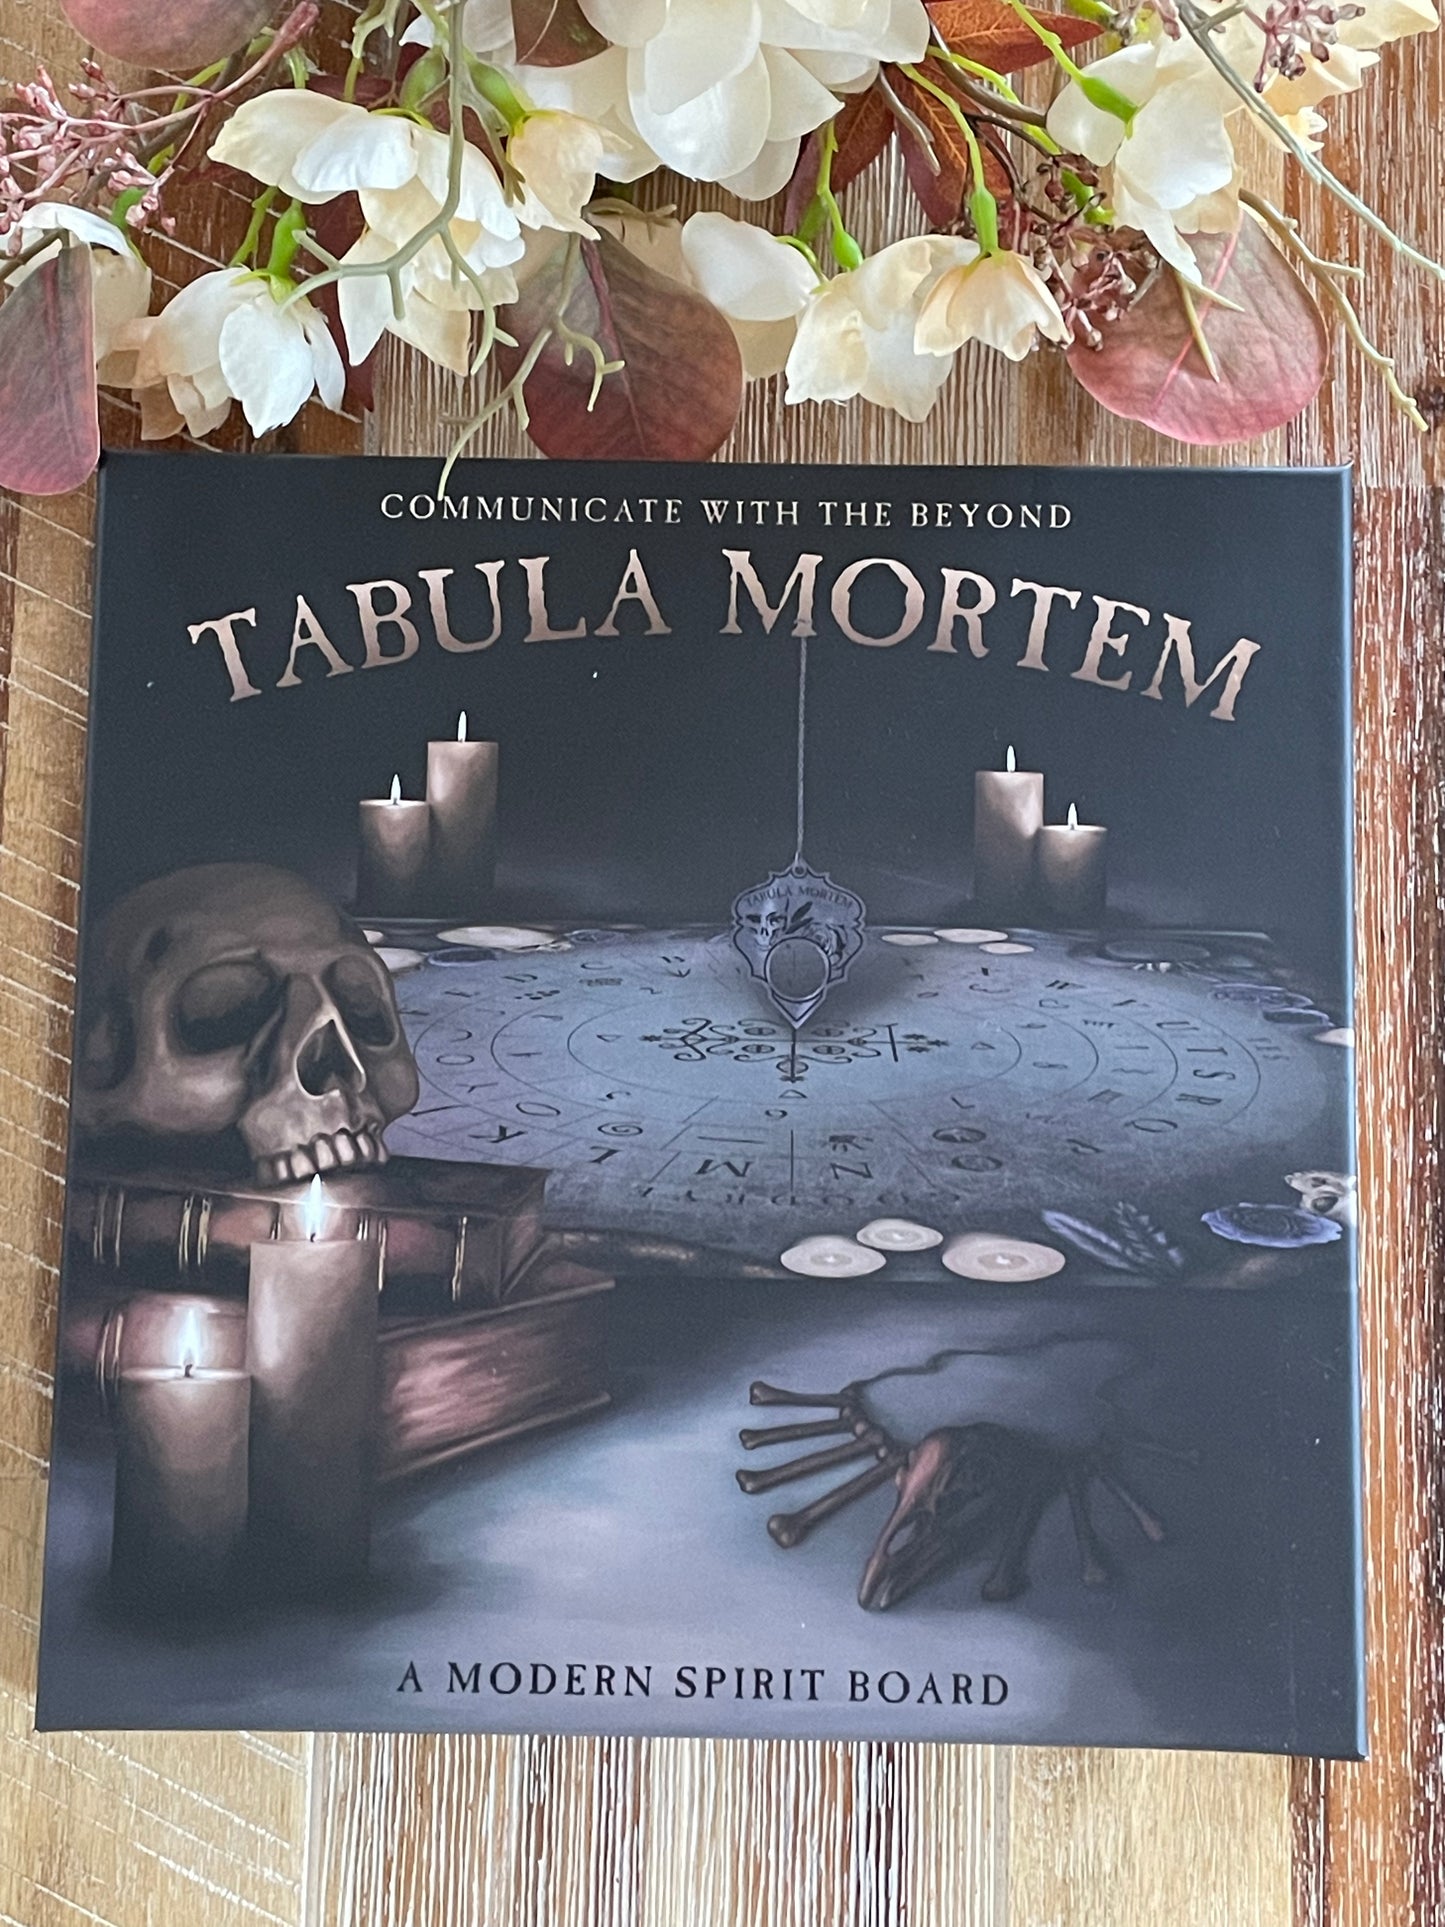 Tabula Mortem ~ A modern spirit board